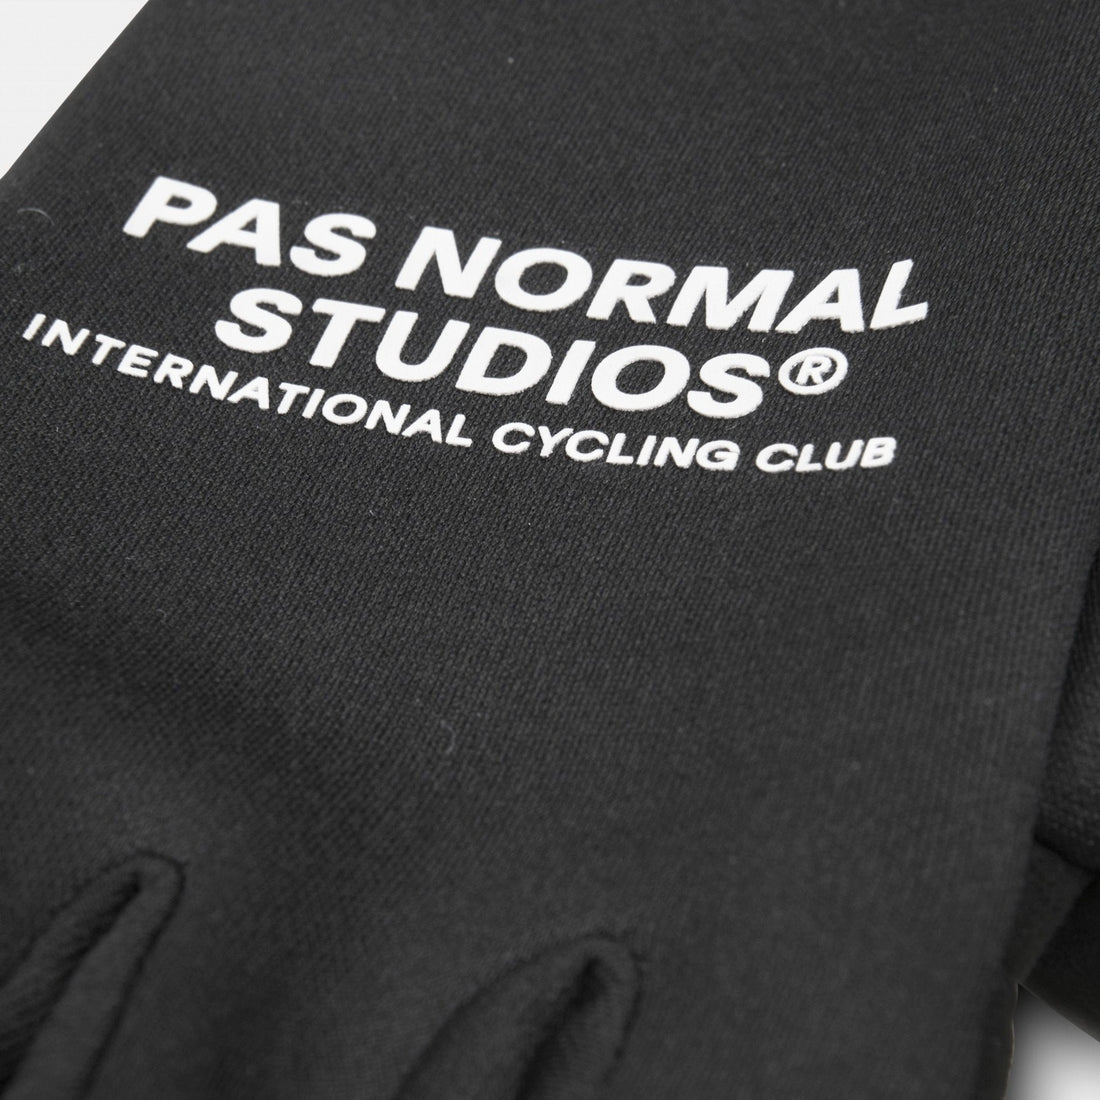 Pas Normal Studios Transtion Gloves - Black